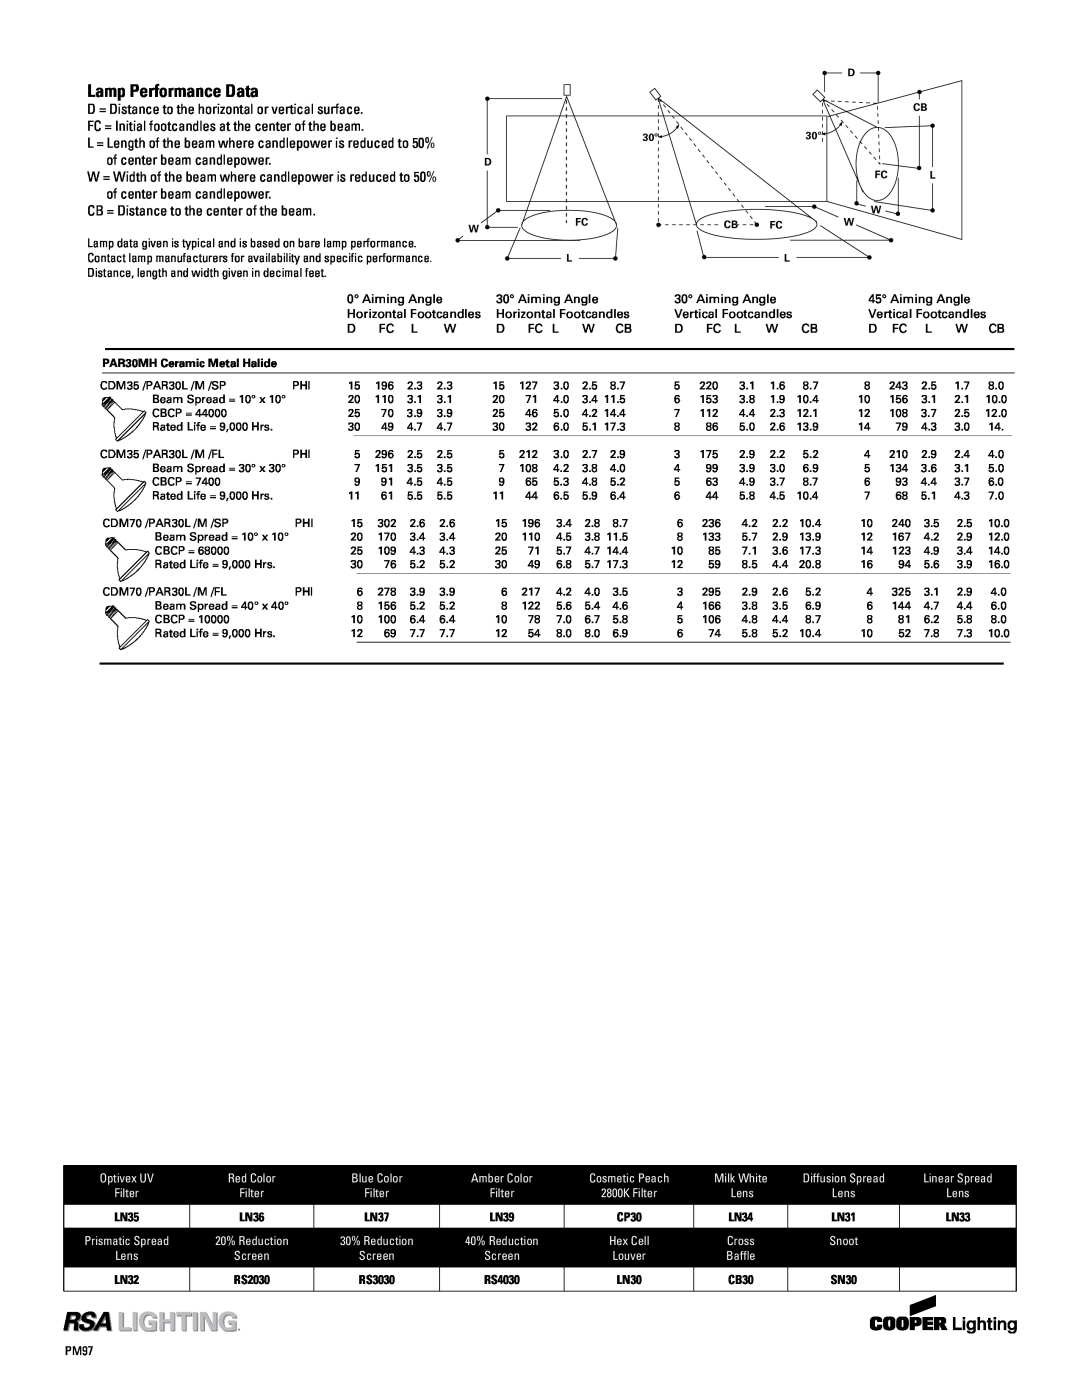 Cooper Lighting PM133cb, PM633cb, PM433cb, PM233cb specifications Lamp Performance Data 